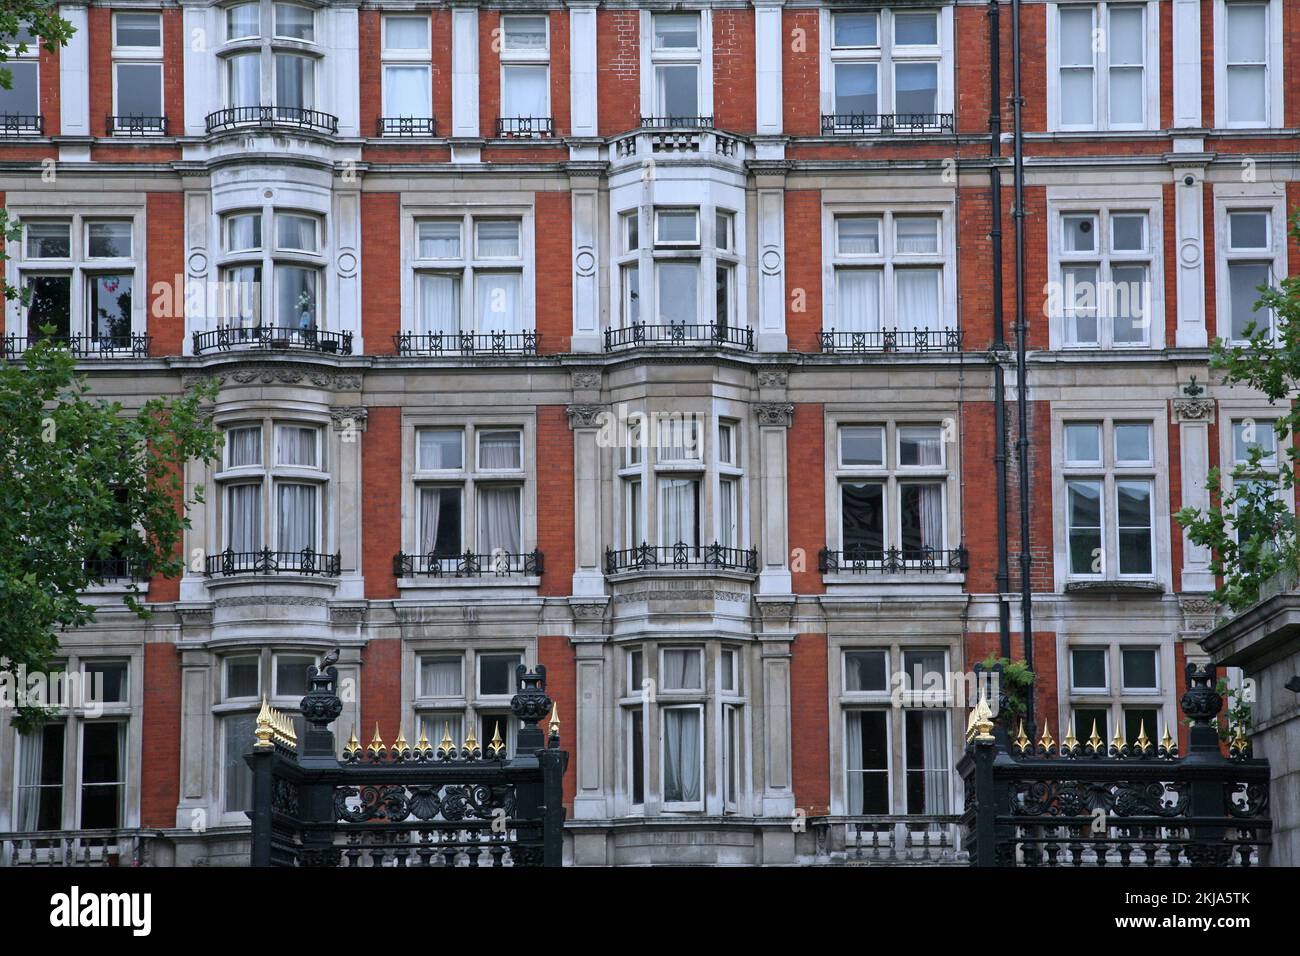 Elegant apartment building, red brick with stone trim around bay windows, Bloomsbury area of London Stock Photo